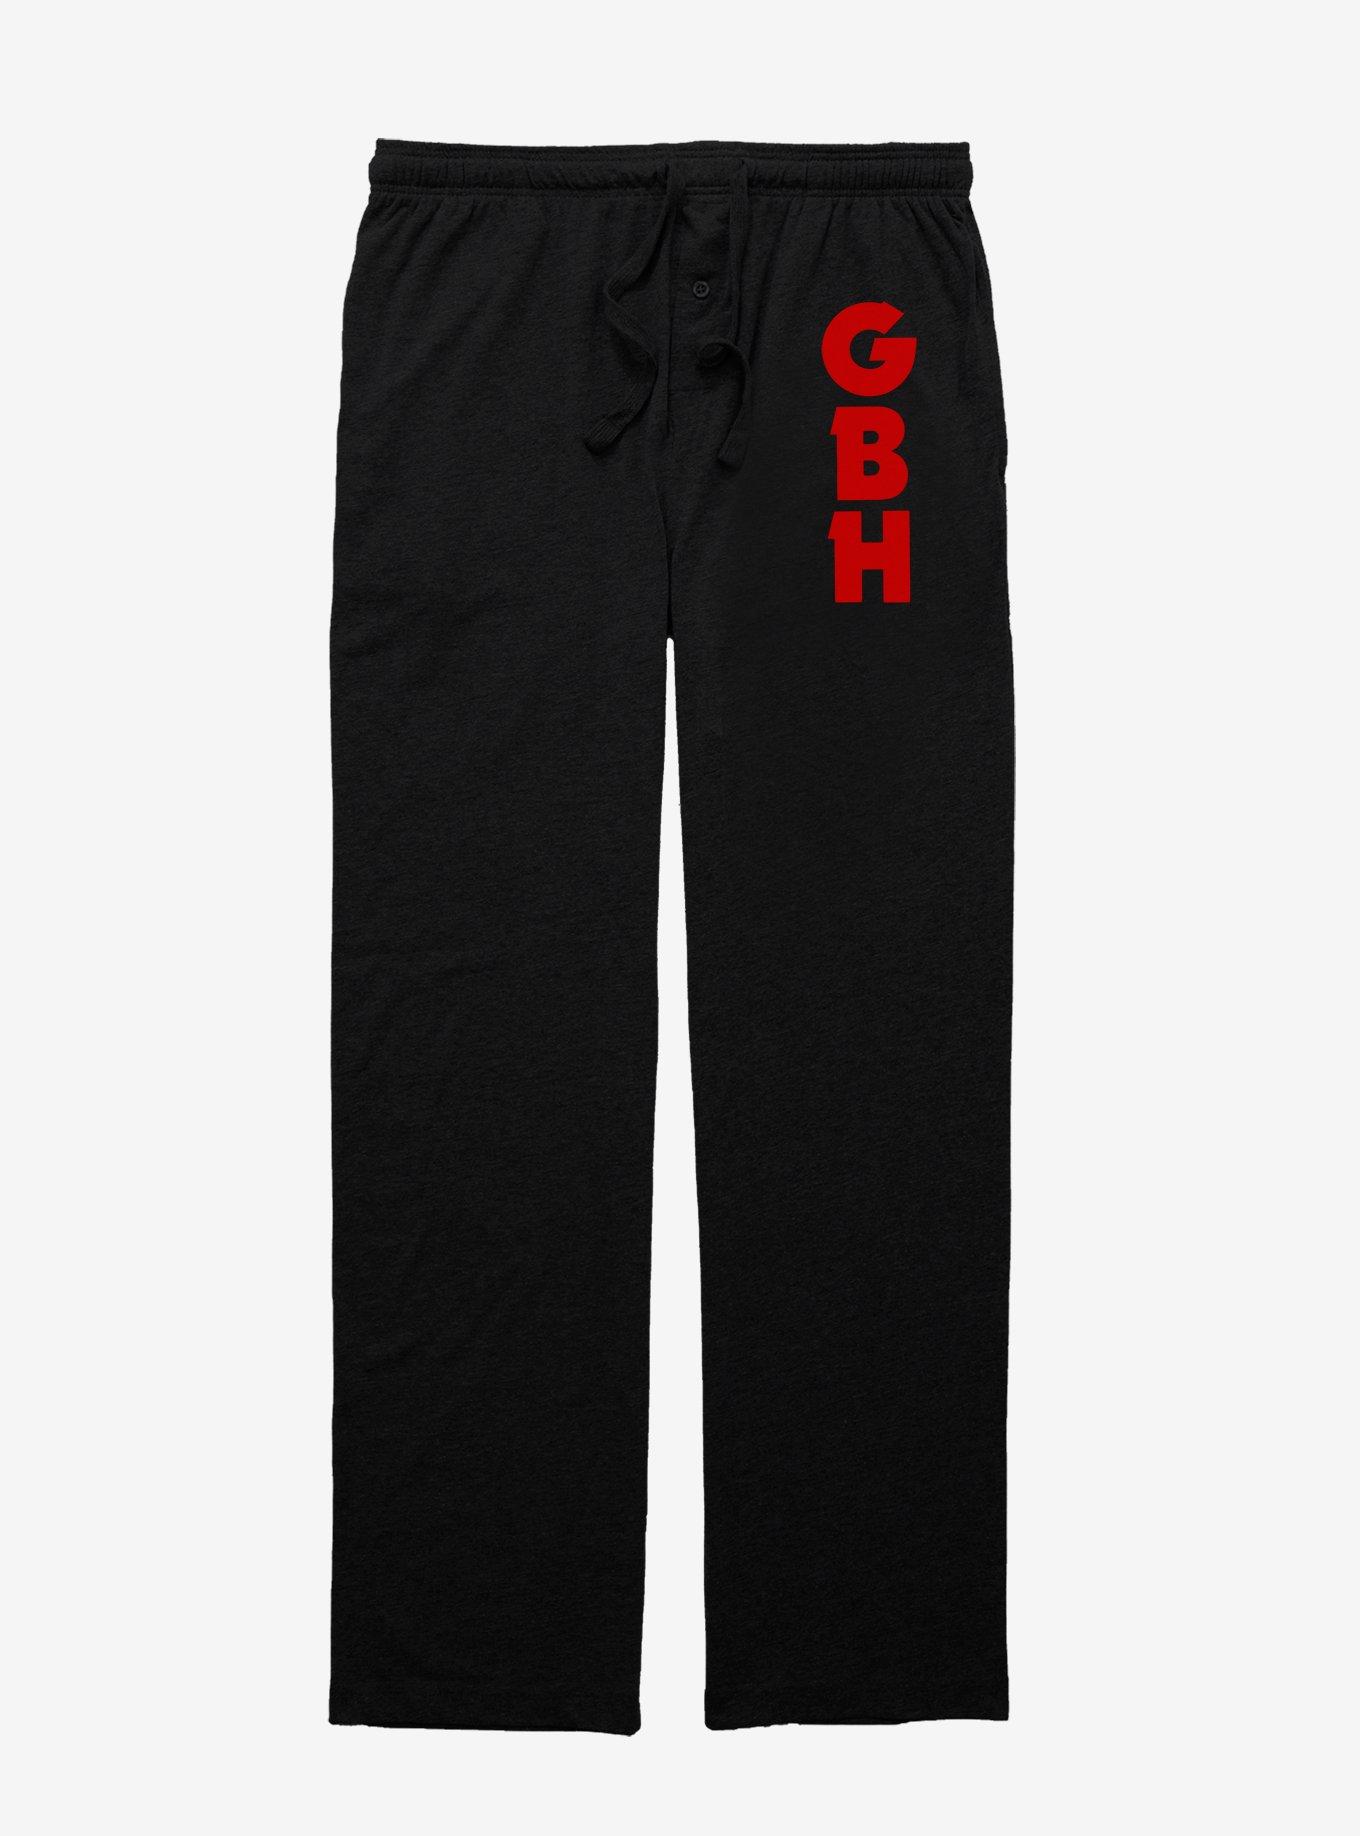 GBH Logo Pajama Pants, BLACK, hi-res